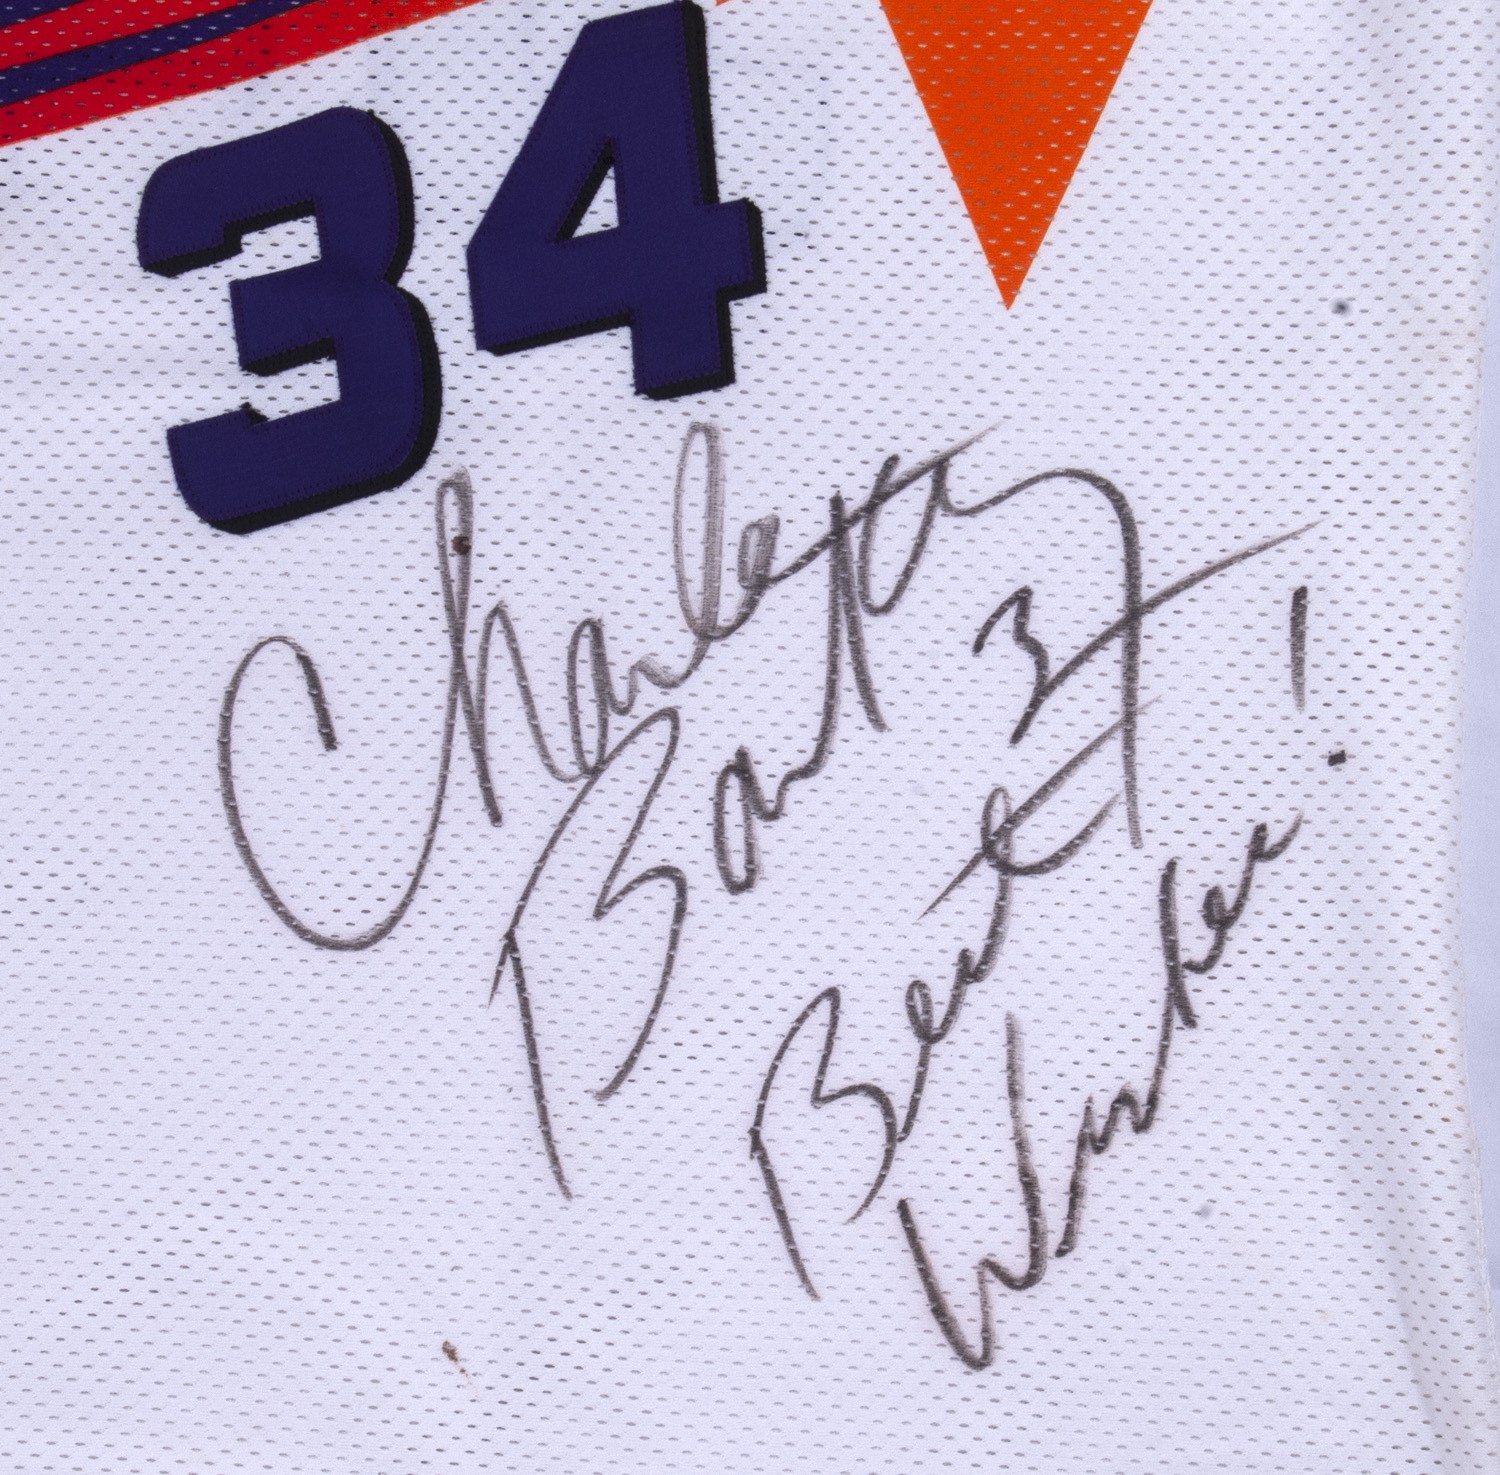 Charles Barkley Phoenix Suns Signed Autographed Purple Custom